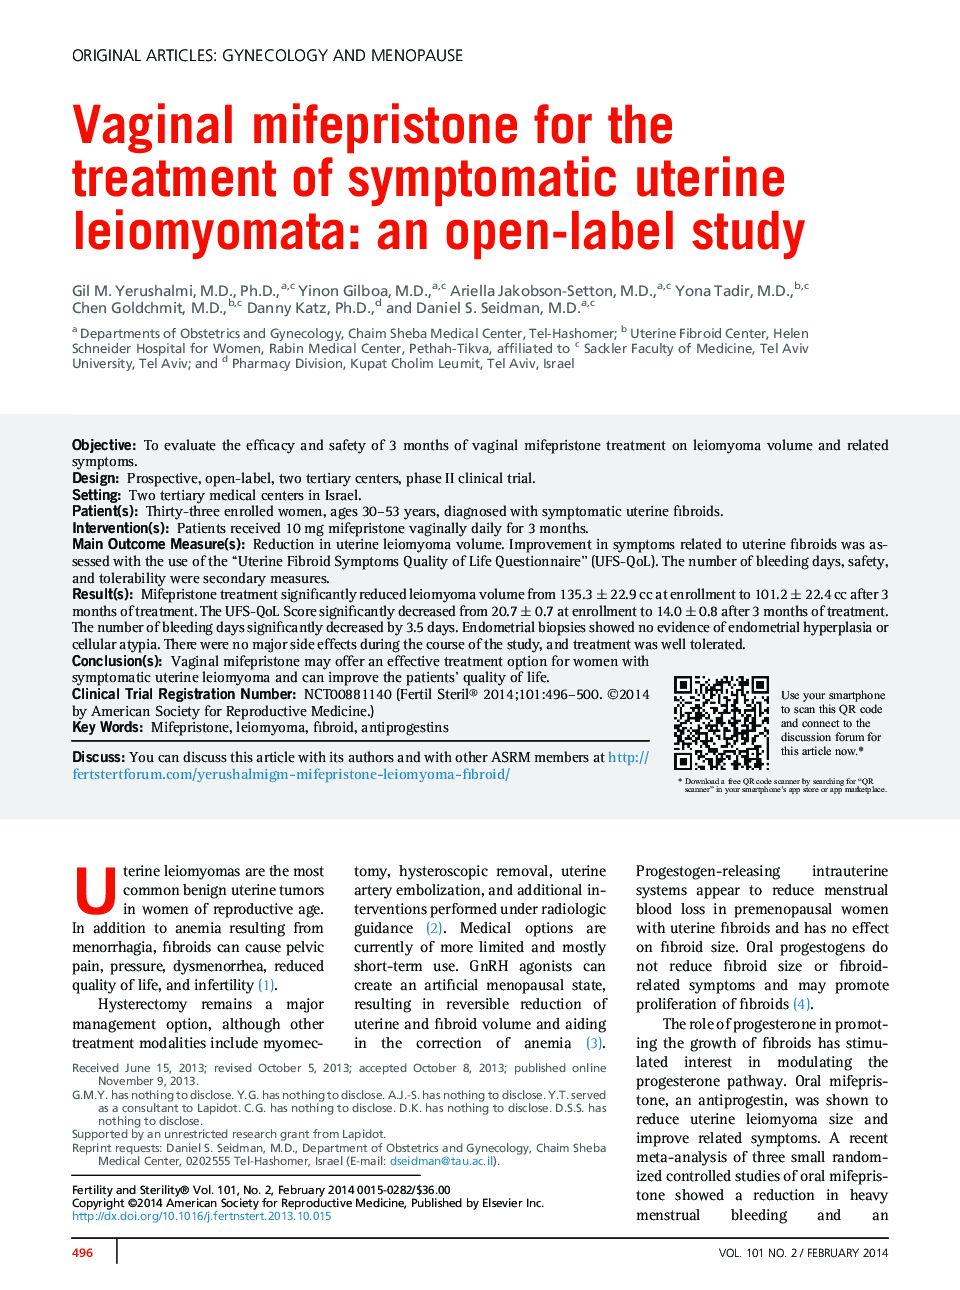 Vaginal mifepristone for the treatment of symptomatic uterine leiomyomata: an open-label study